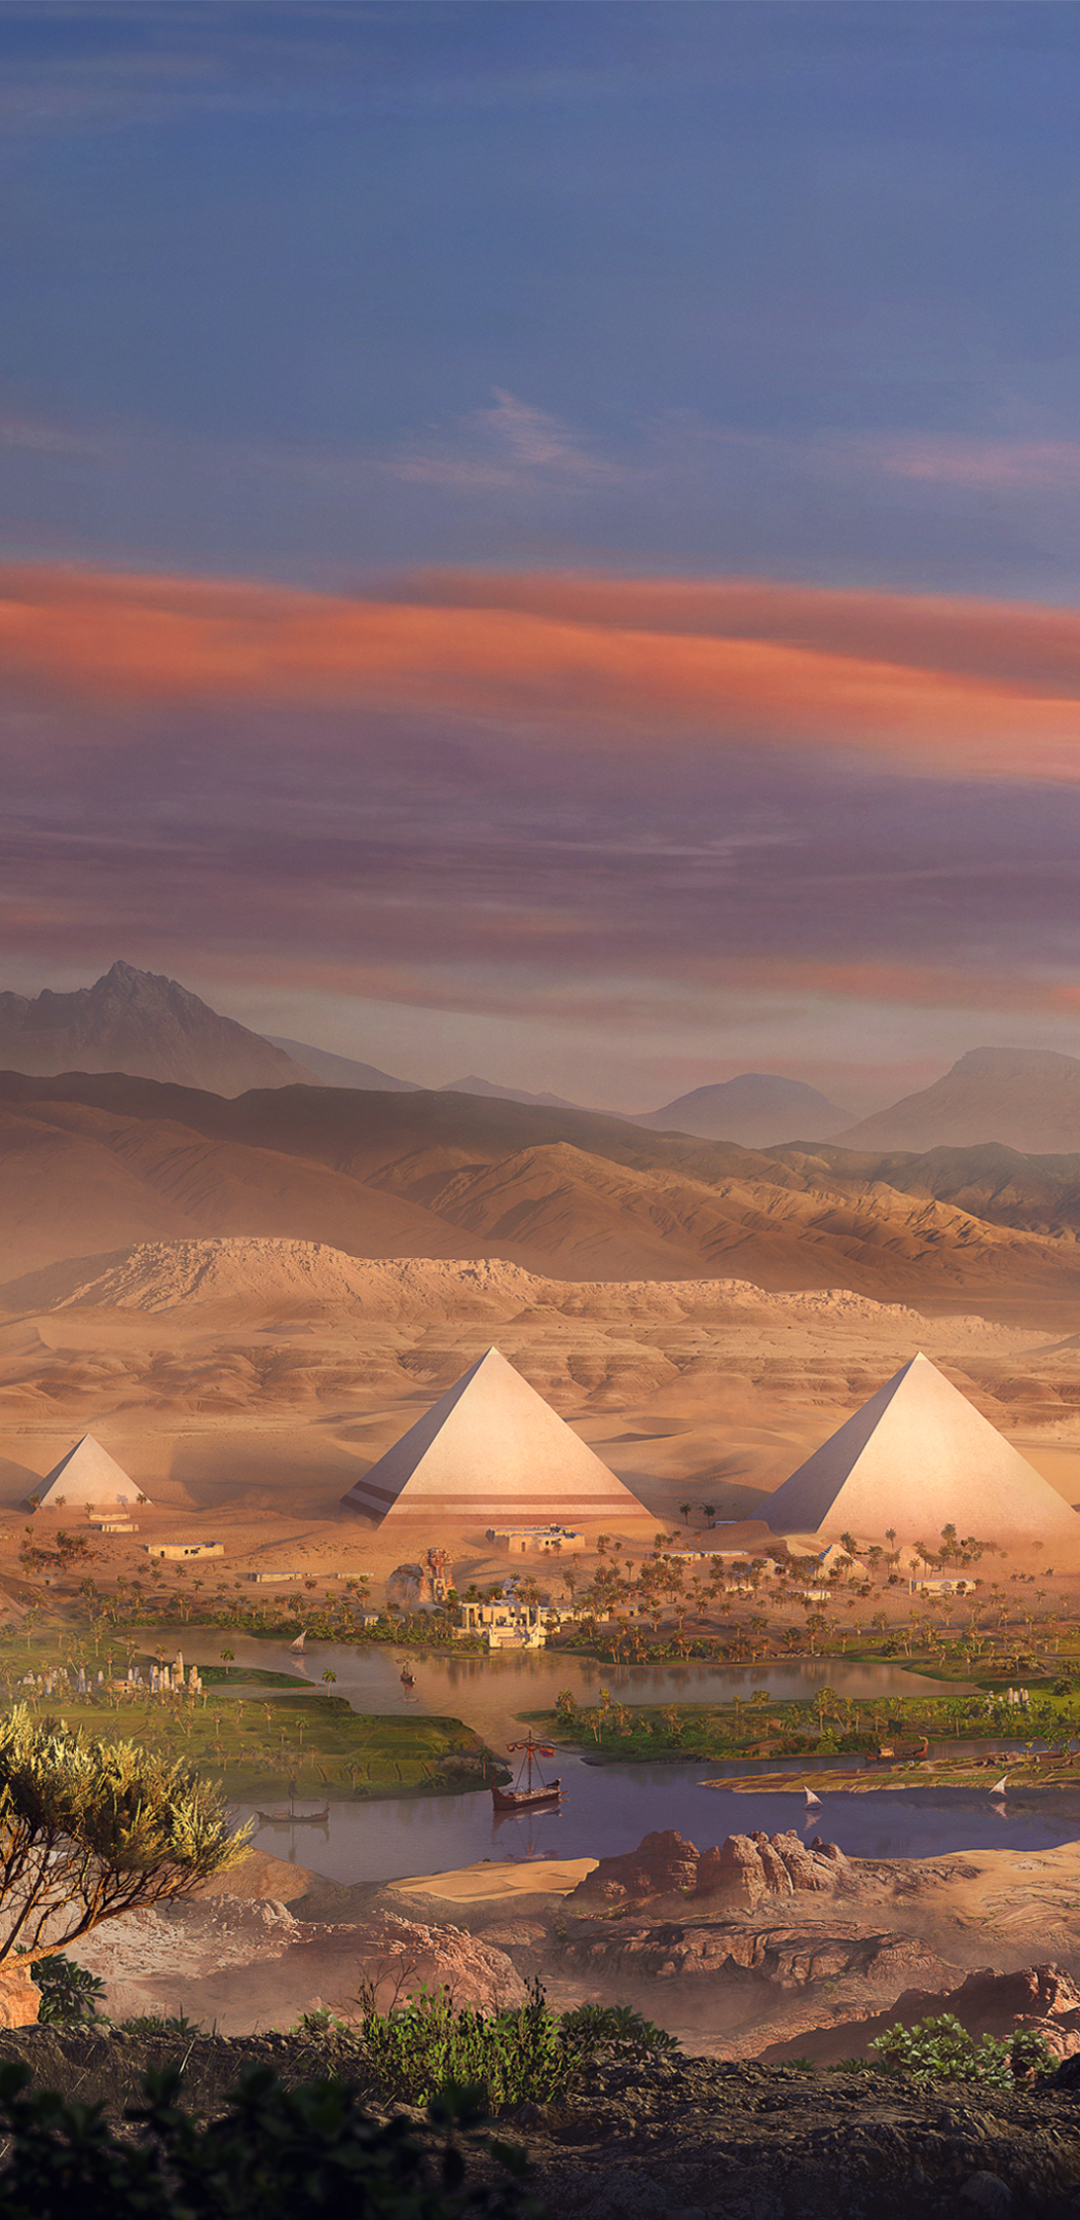 Descarga gratuita de fondo de pantalla para móvil de Desierto, Egipto, Pirámide, Videojuego, Assassin's Creed, Credo Del Asesino, Assassin's Creed: Origins.